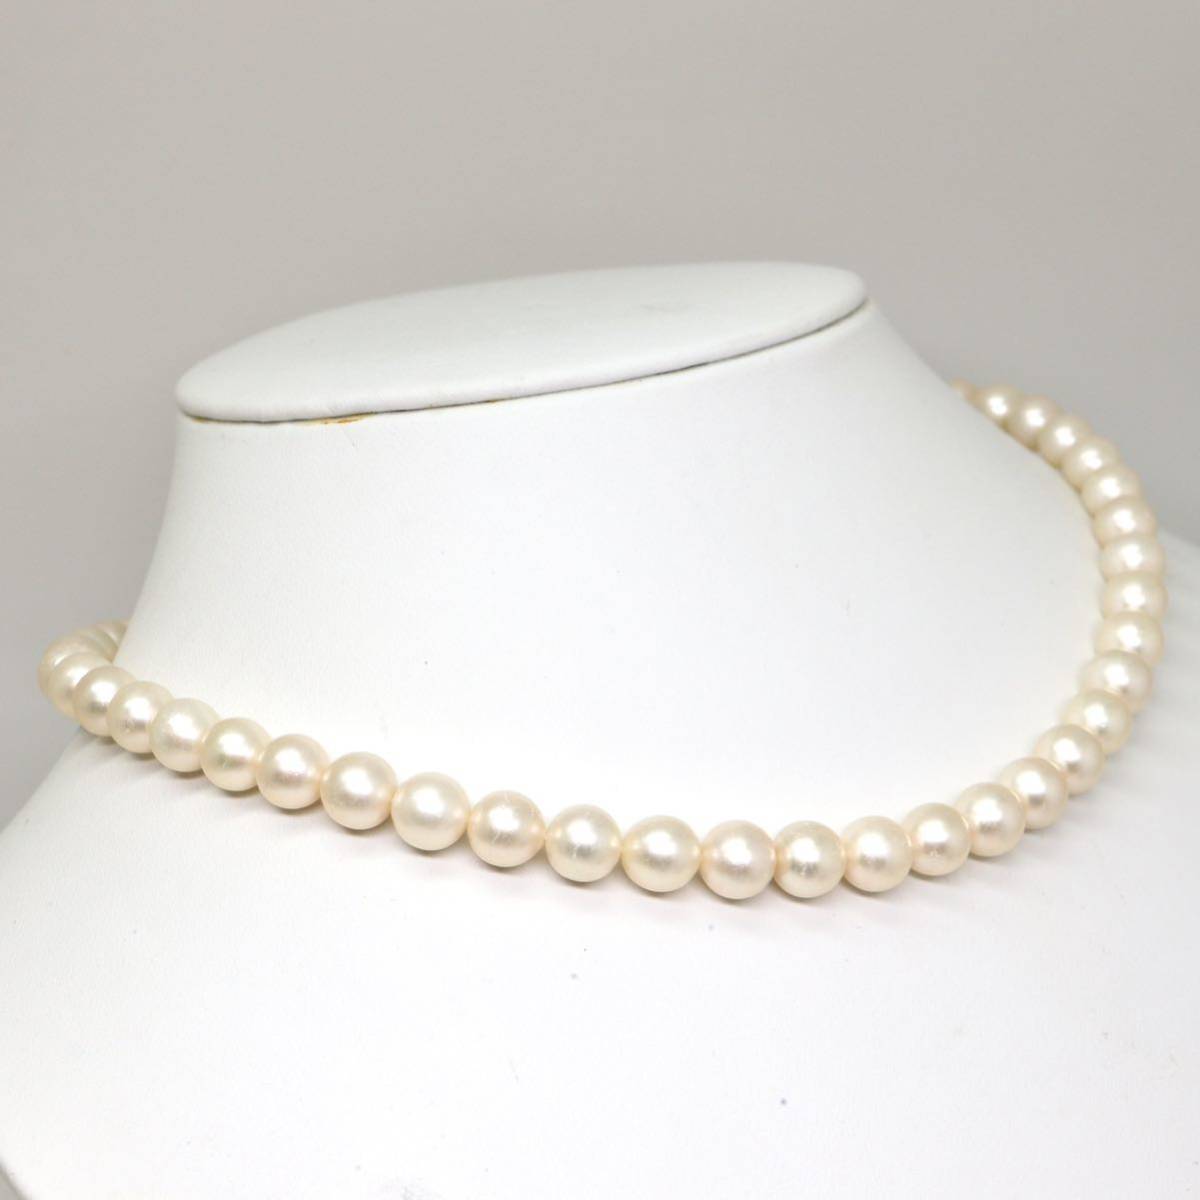 ◆K14 アコヤ本真珠ネックレス◆N 33.6g 40.0cm 7.5mm珠 真珠 pearl necklace ジュエリー jewelry EA5/EA5_画像3